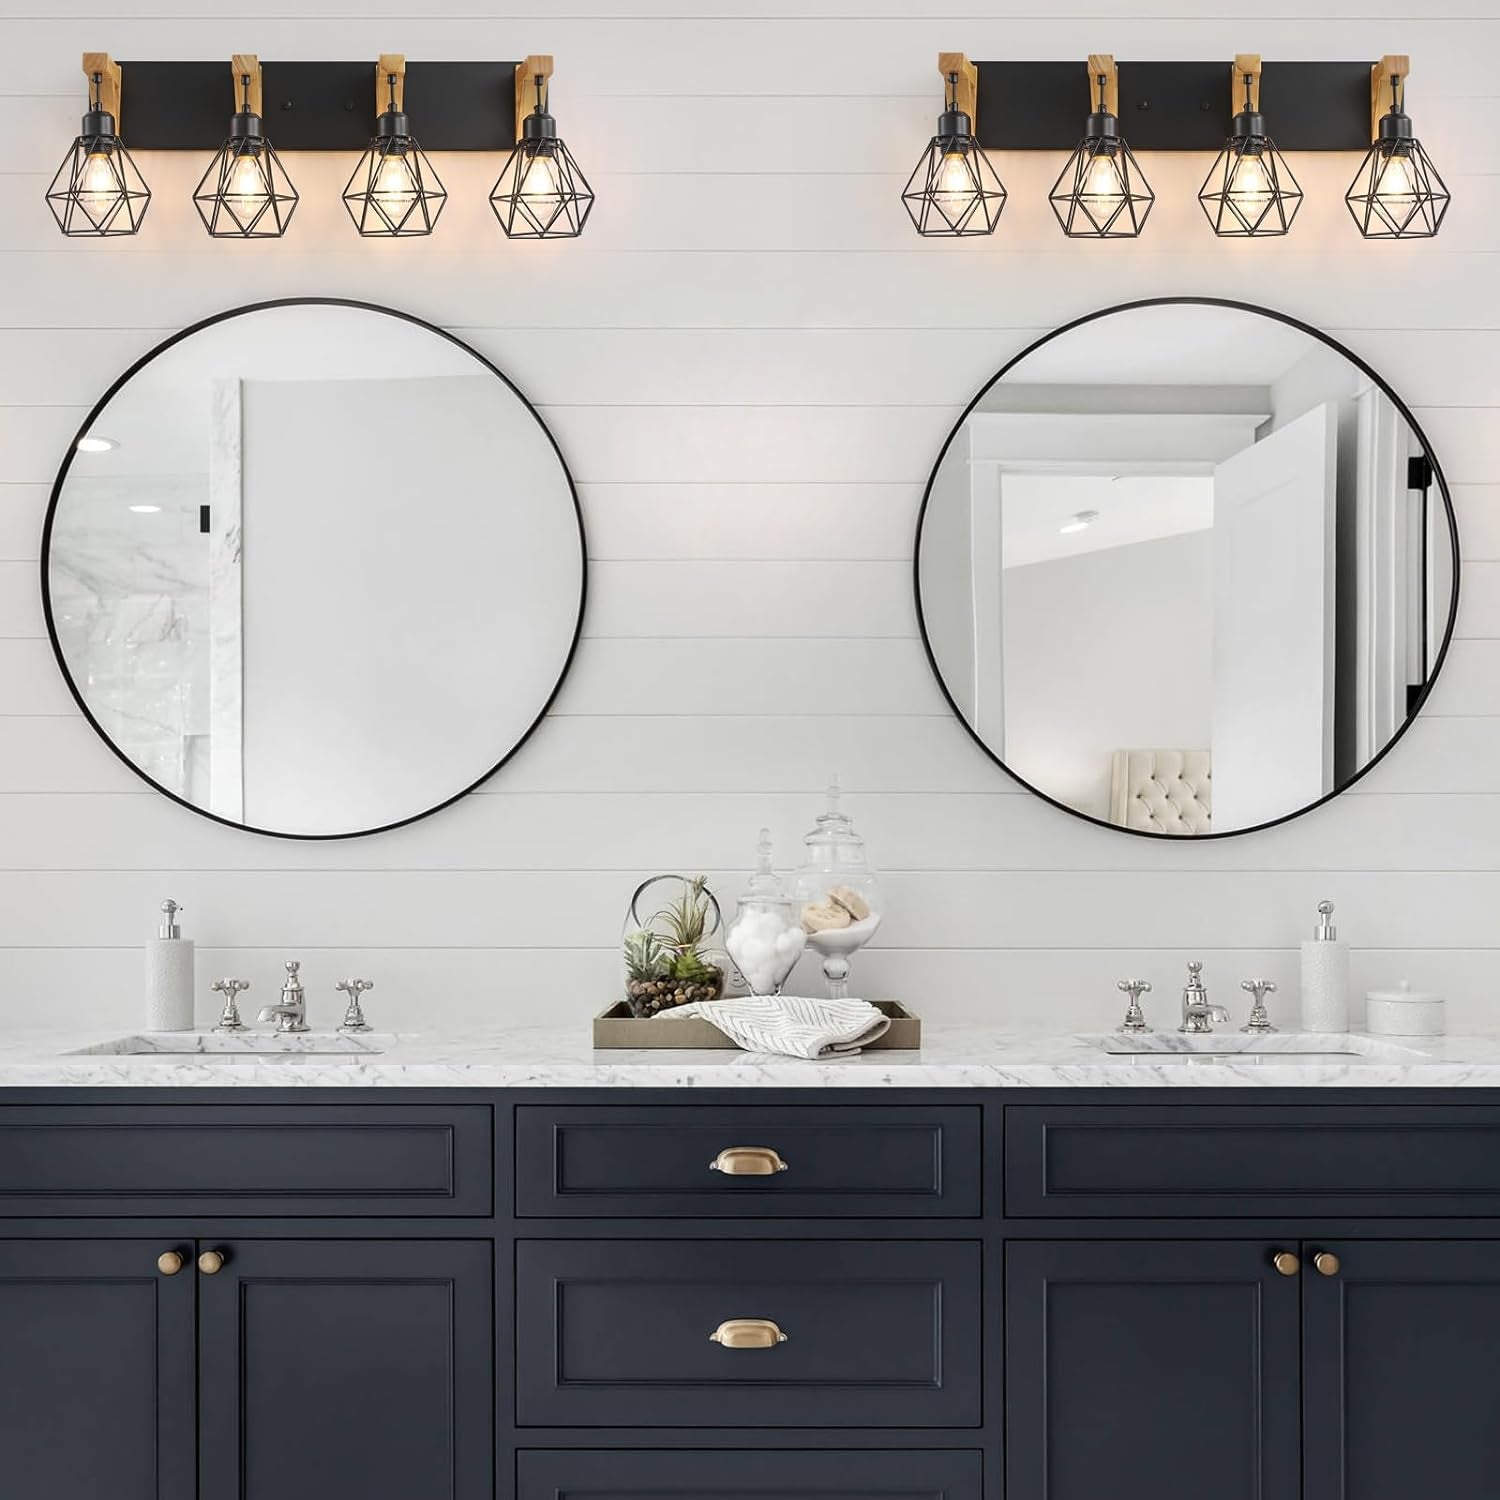 4-Light Farmhouse Bathroom Vanity Light Fixtures, Wood Bathroom Light over Mirror, Rustic Sconces Wall Lighting with Elegant Metal Lampshade for Living Room, Bedroom, Hallway